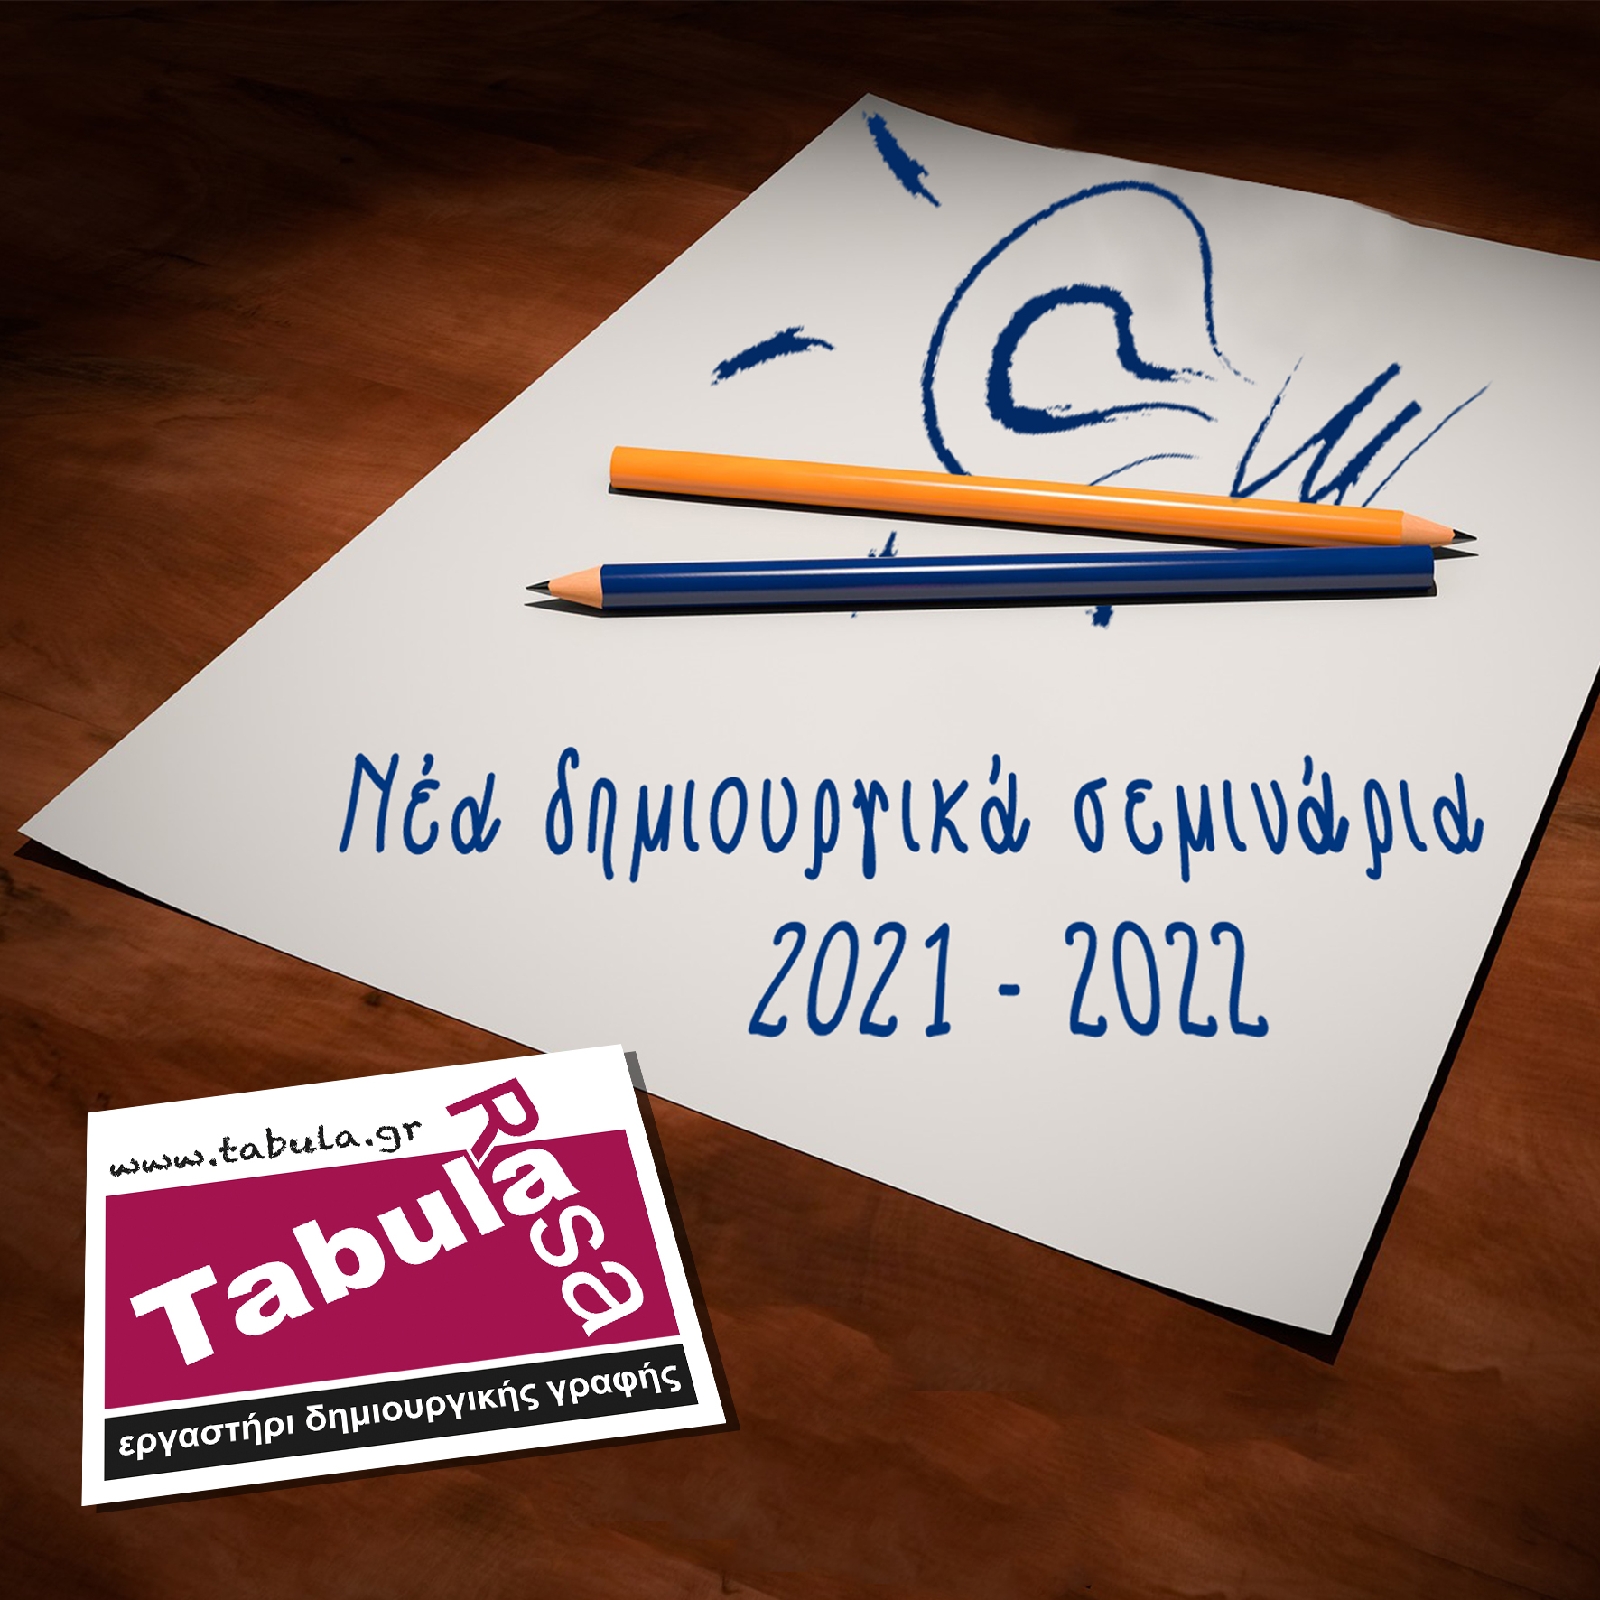 Tabula Rasa: Νέος κύκλος δημιουργικών σεμιναρίων 2021-2022 - Φωτογραφία 1